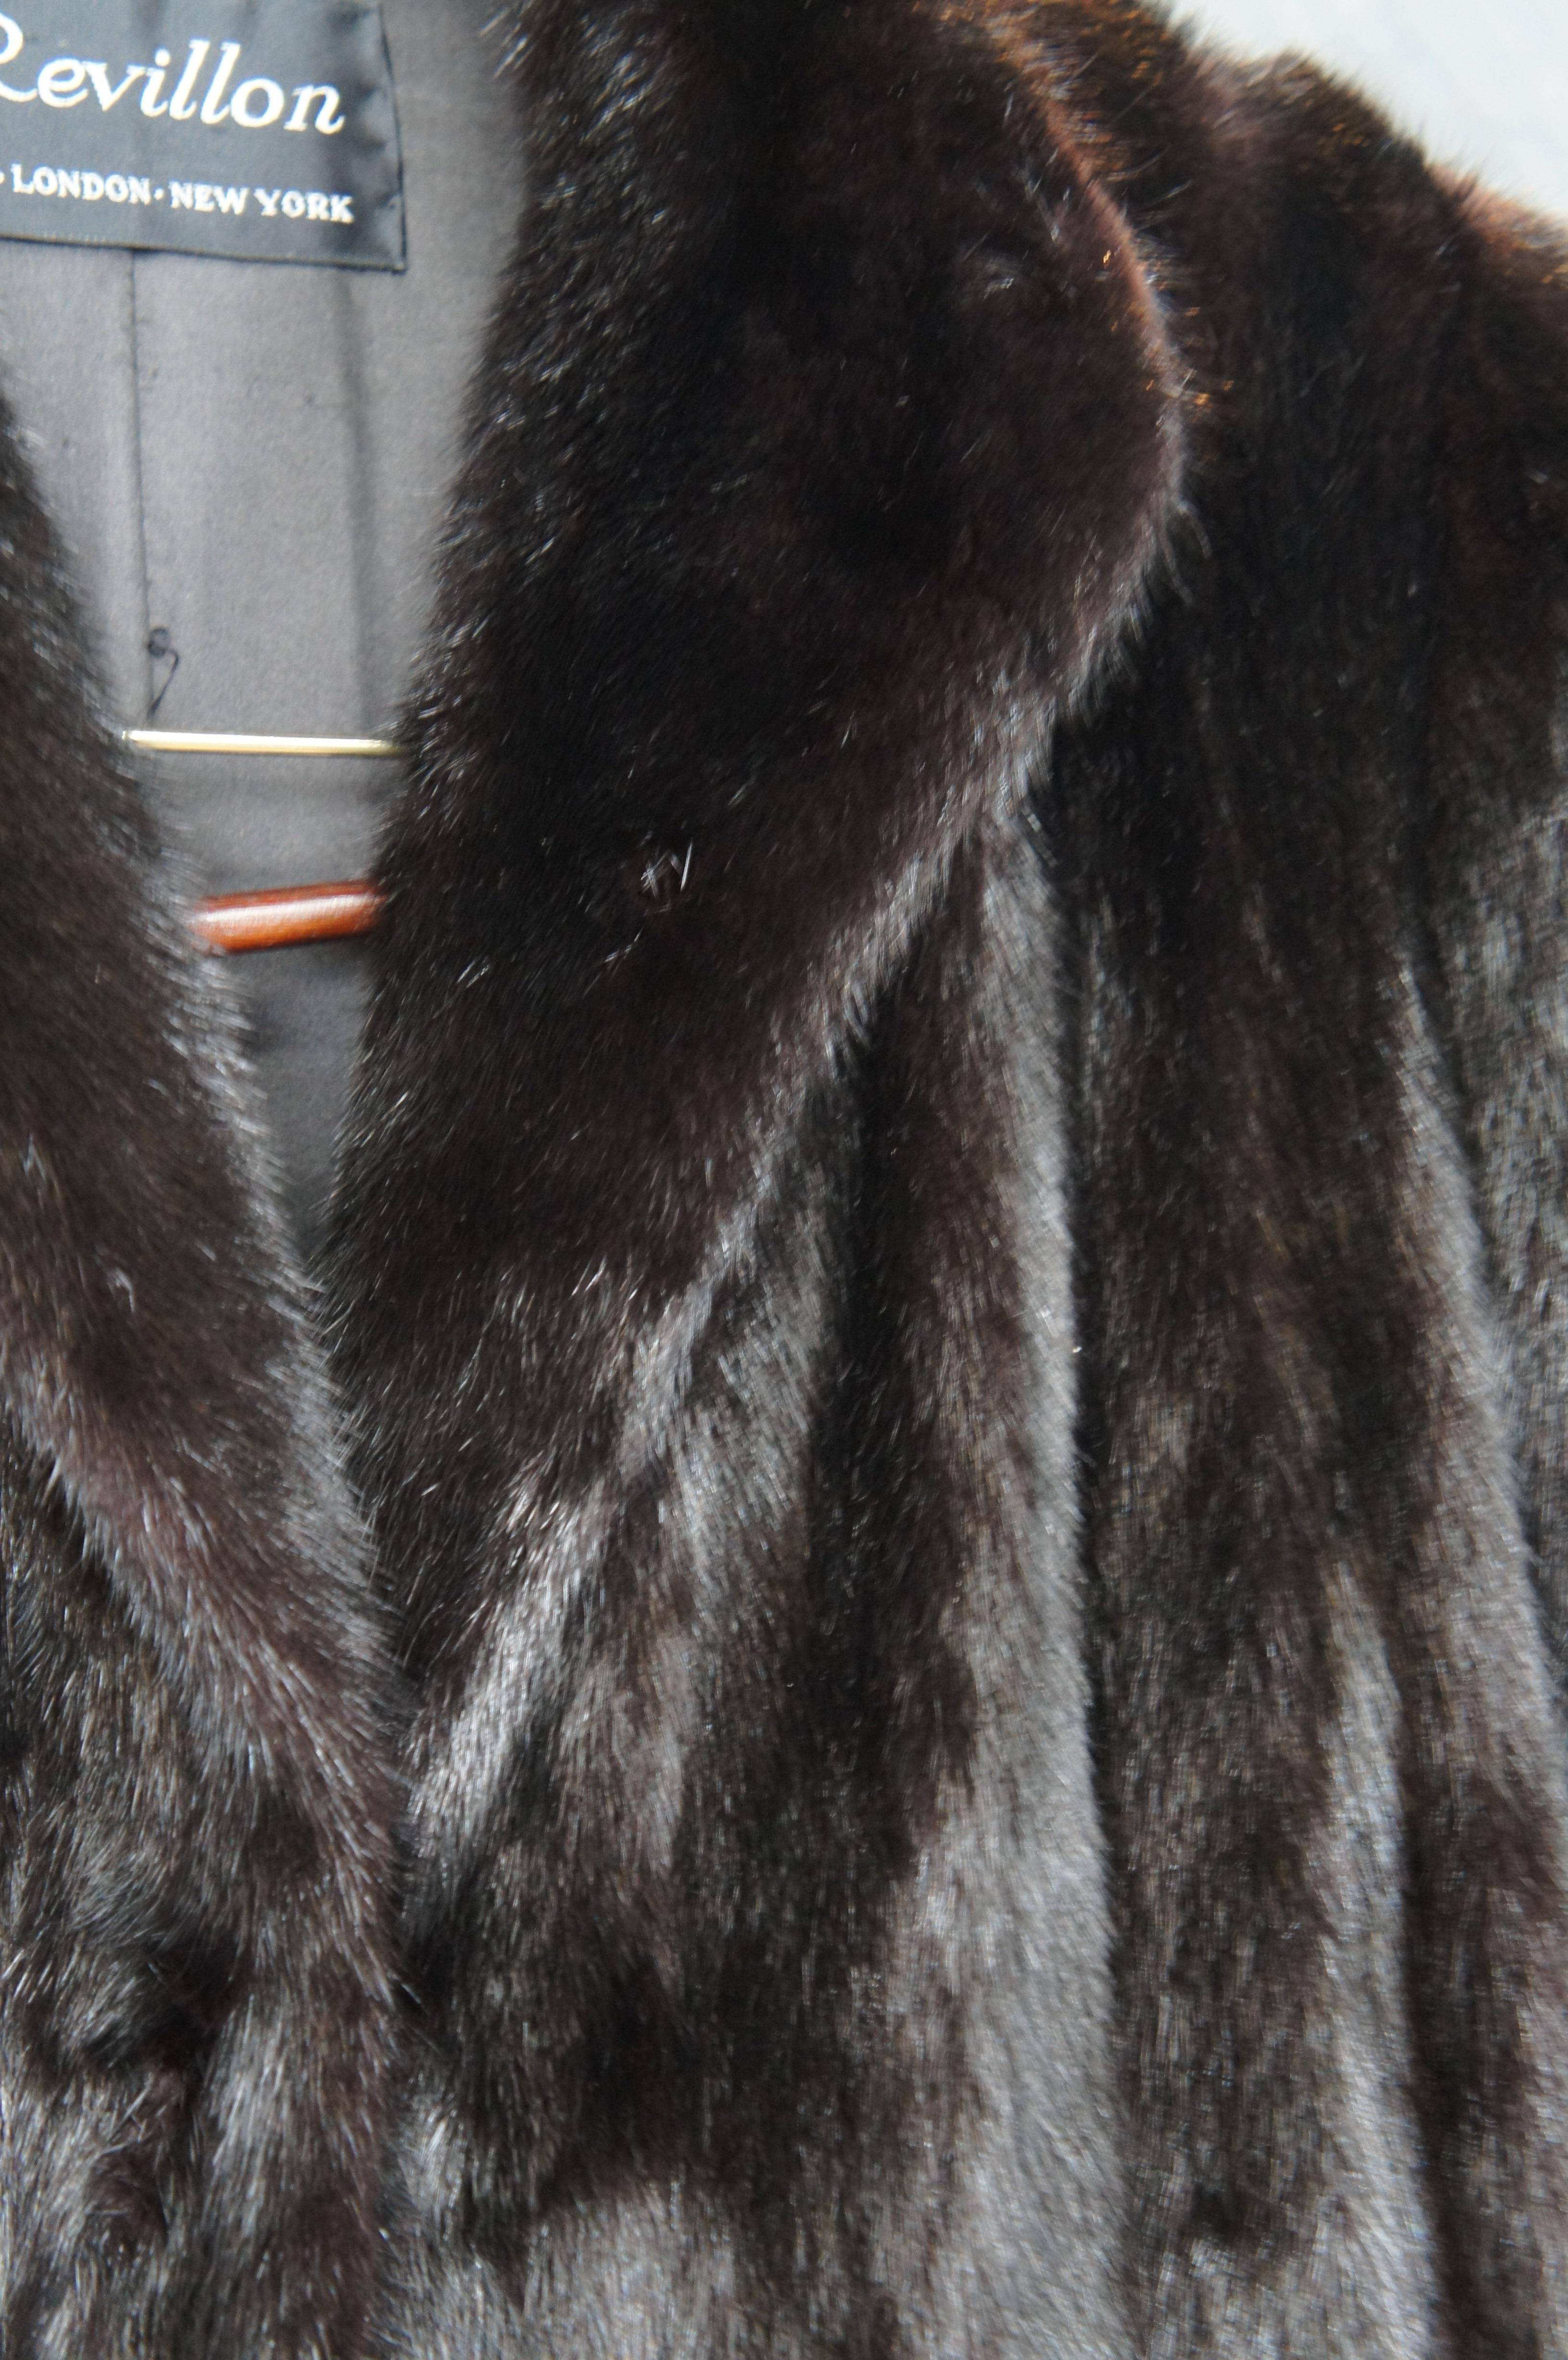 Vintage Revillon Paris London New York Black Full Length Mink Fur Coat 1